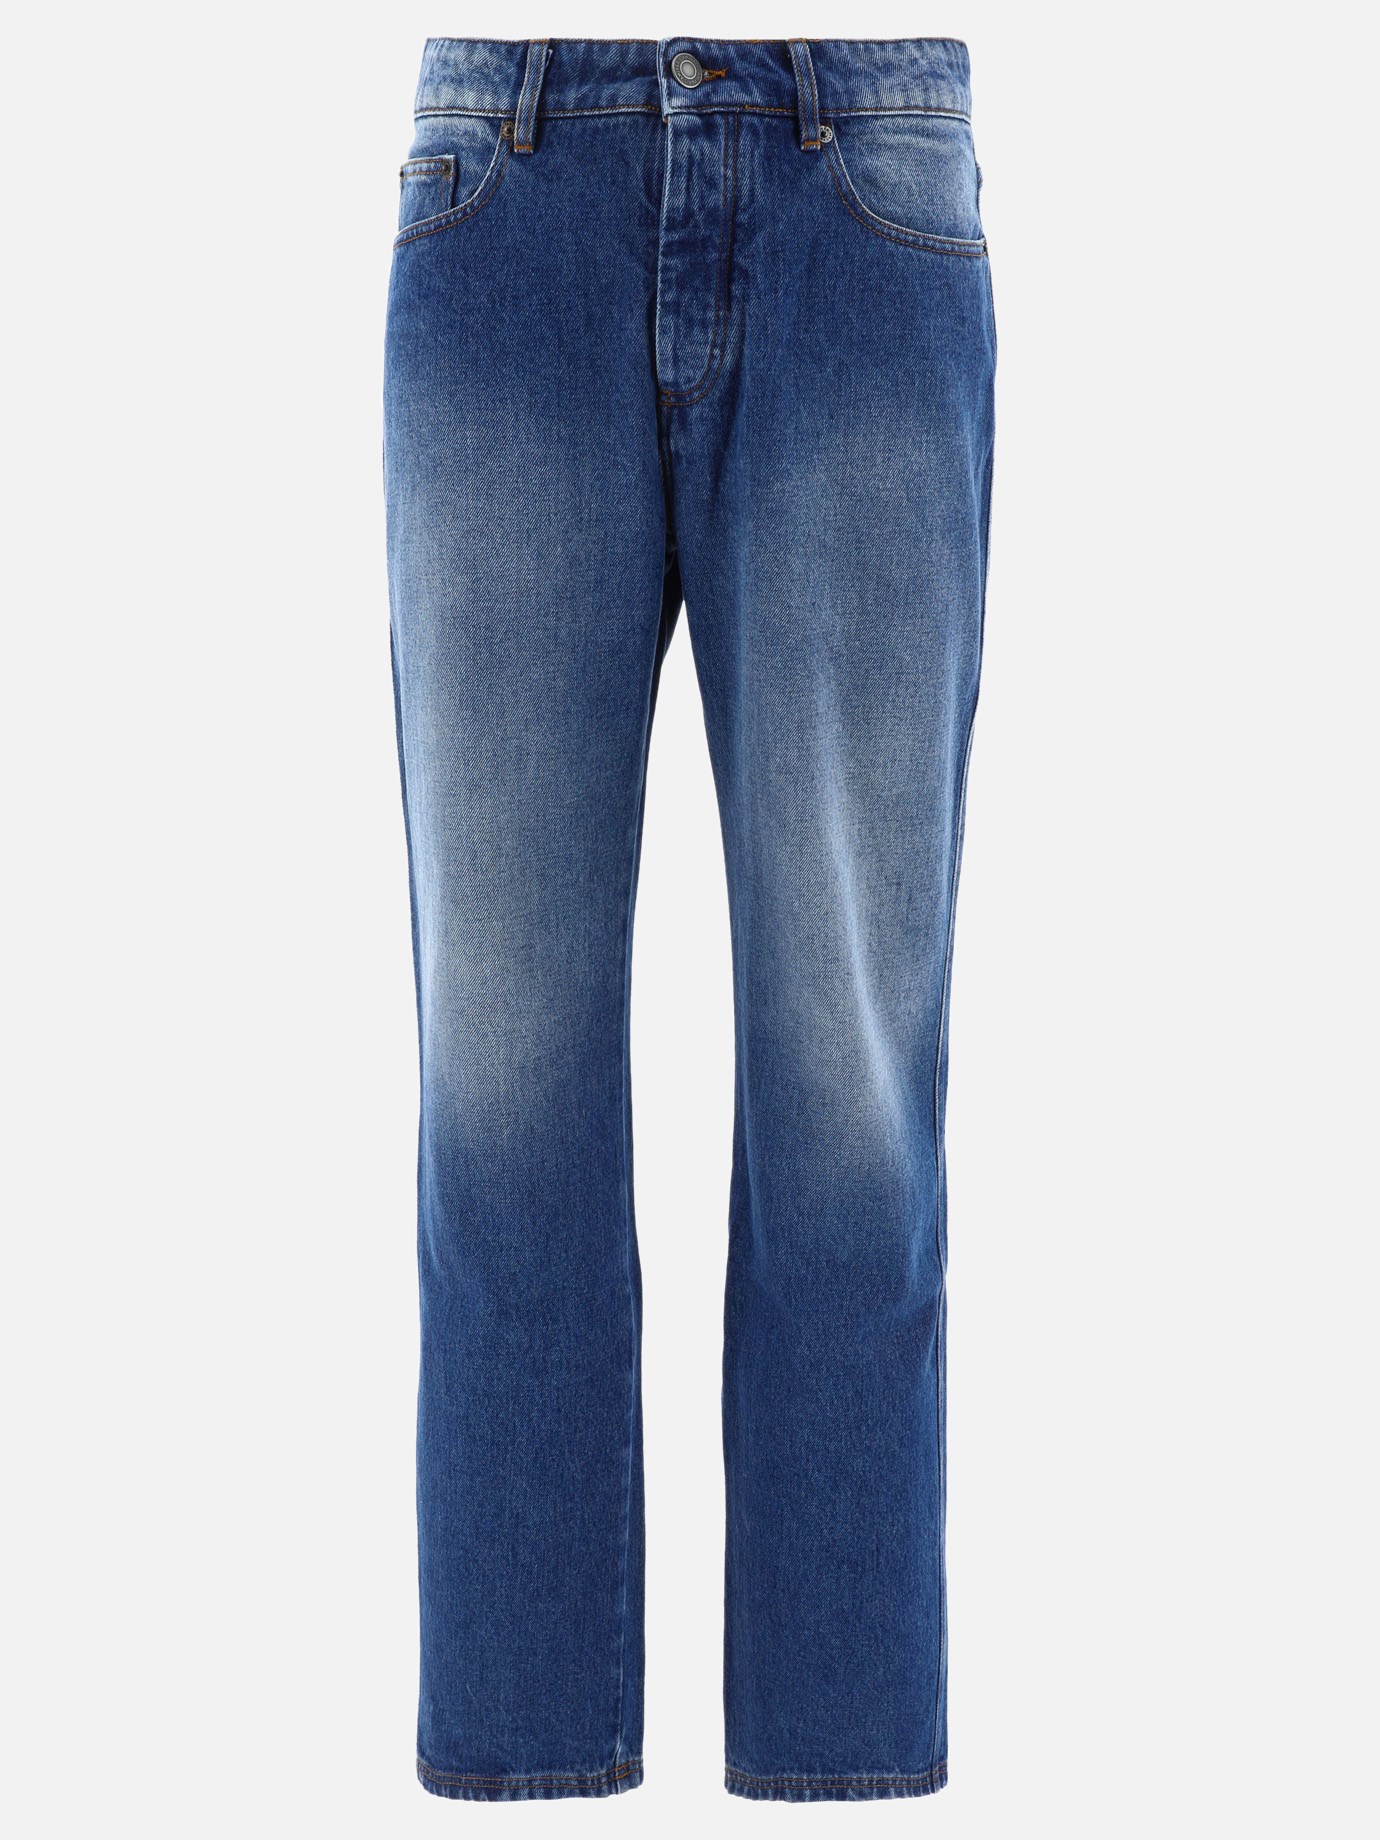 Straight leg jeansby Ami Paris - 0